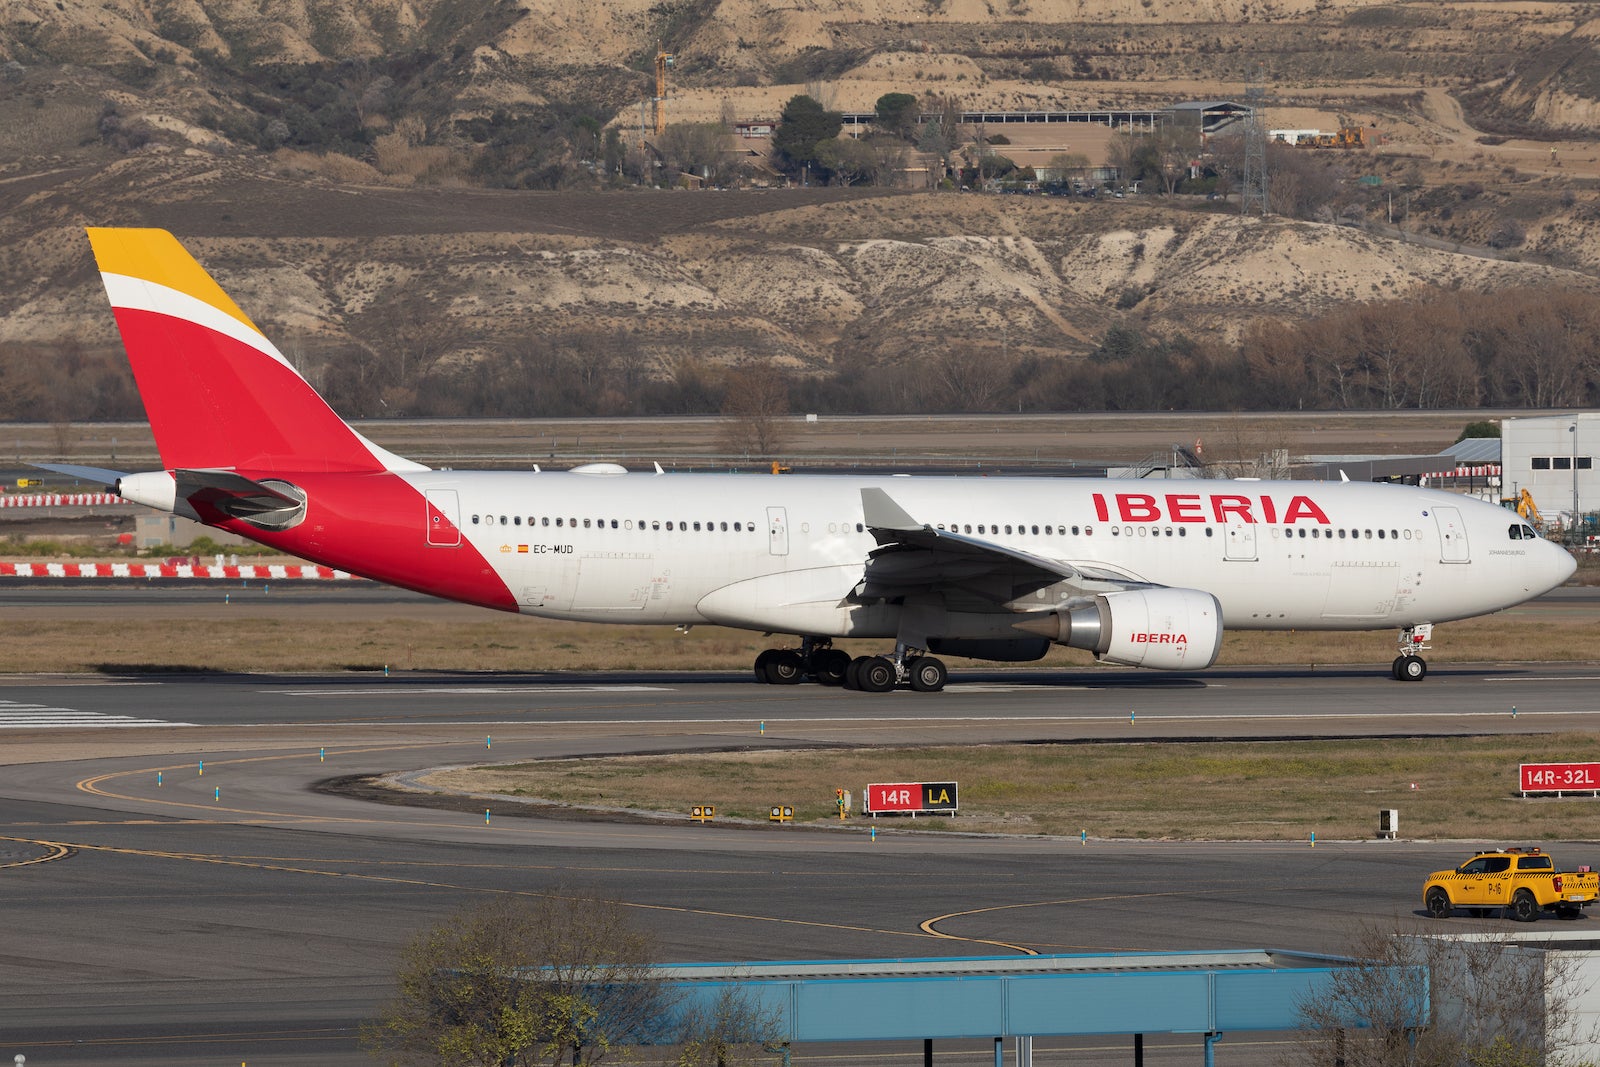 Iberia Airbus A330 at Madrid Airport